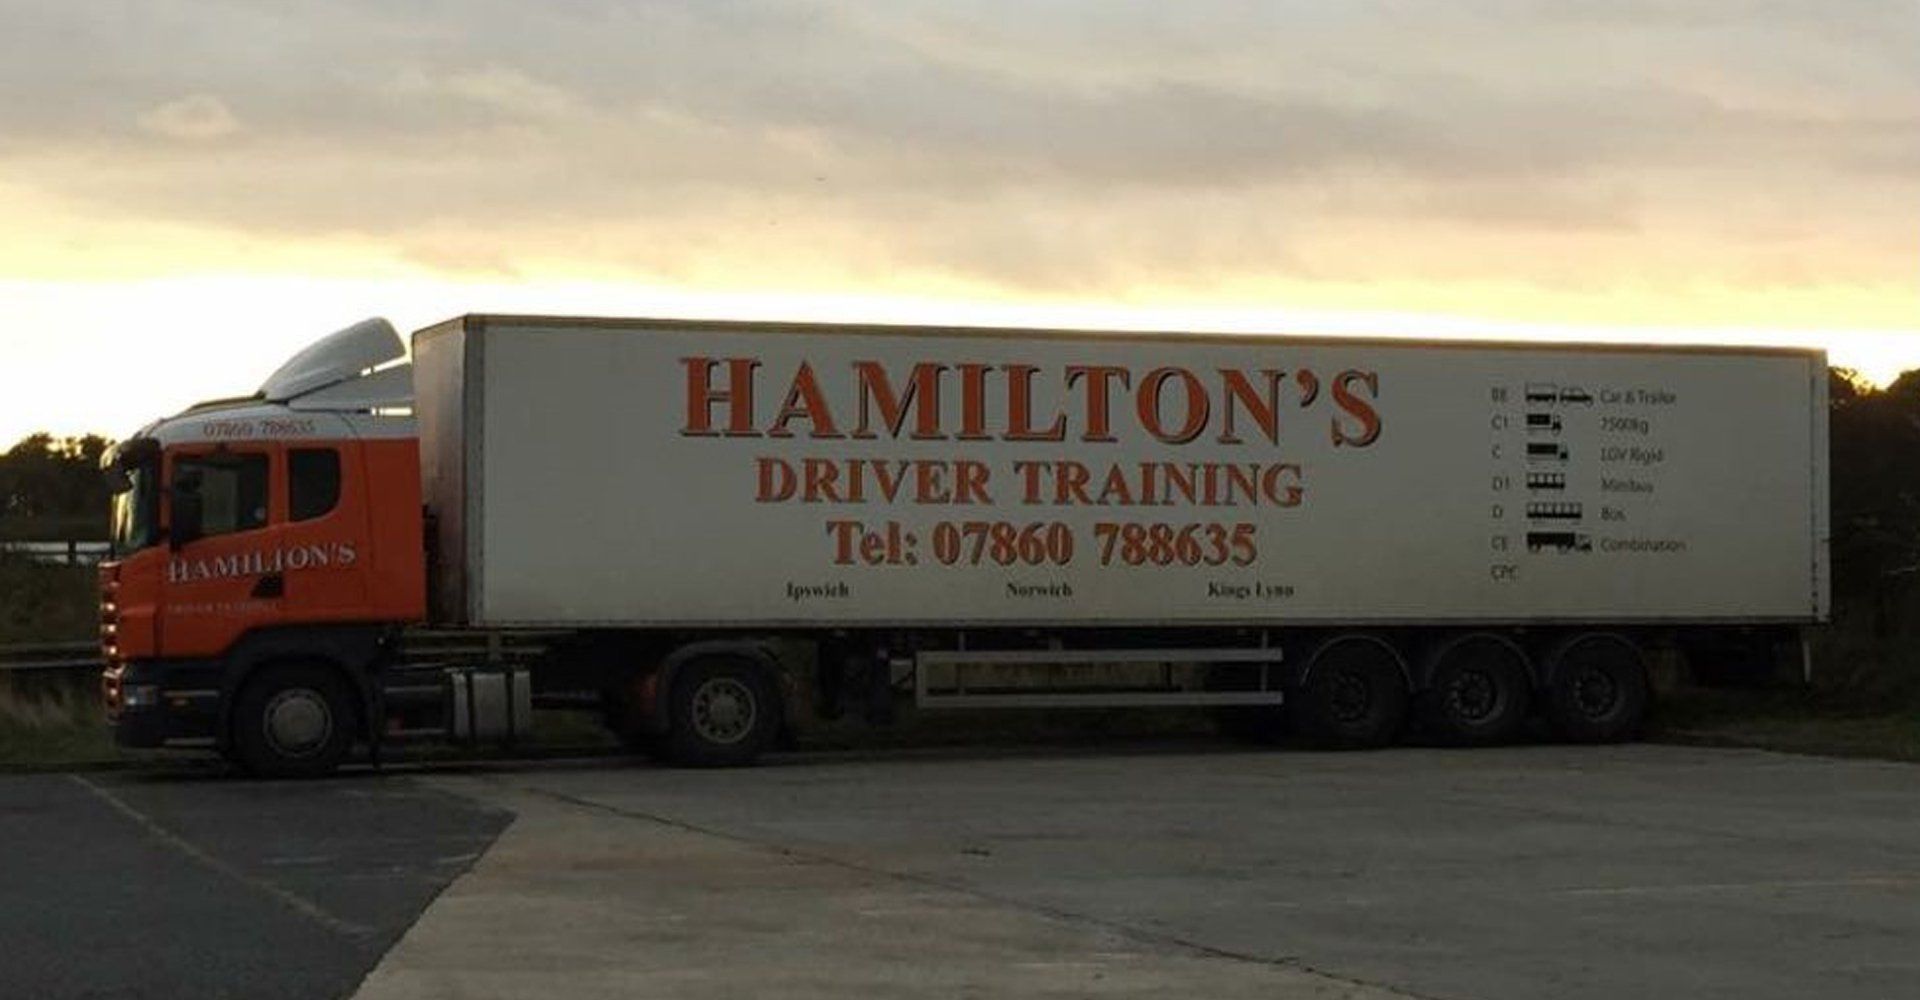 Hamilton's LGV/HGV lorry